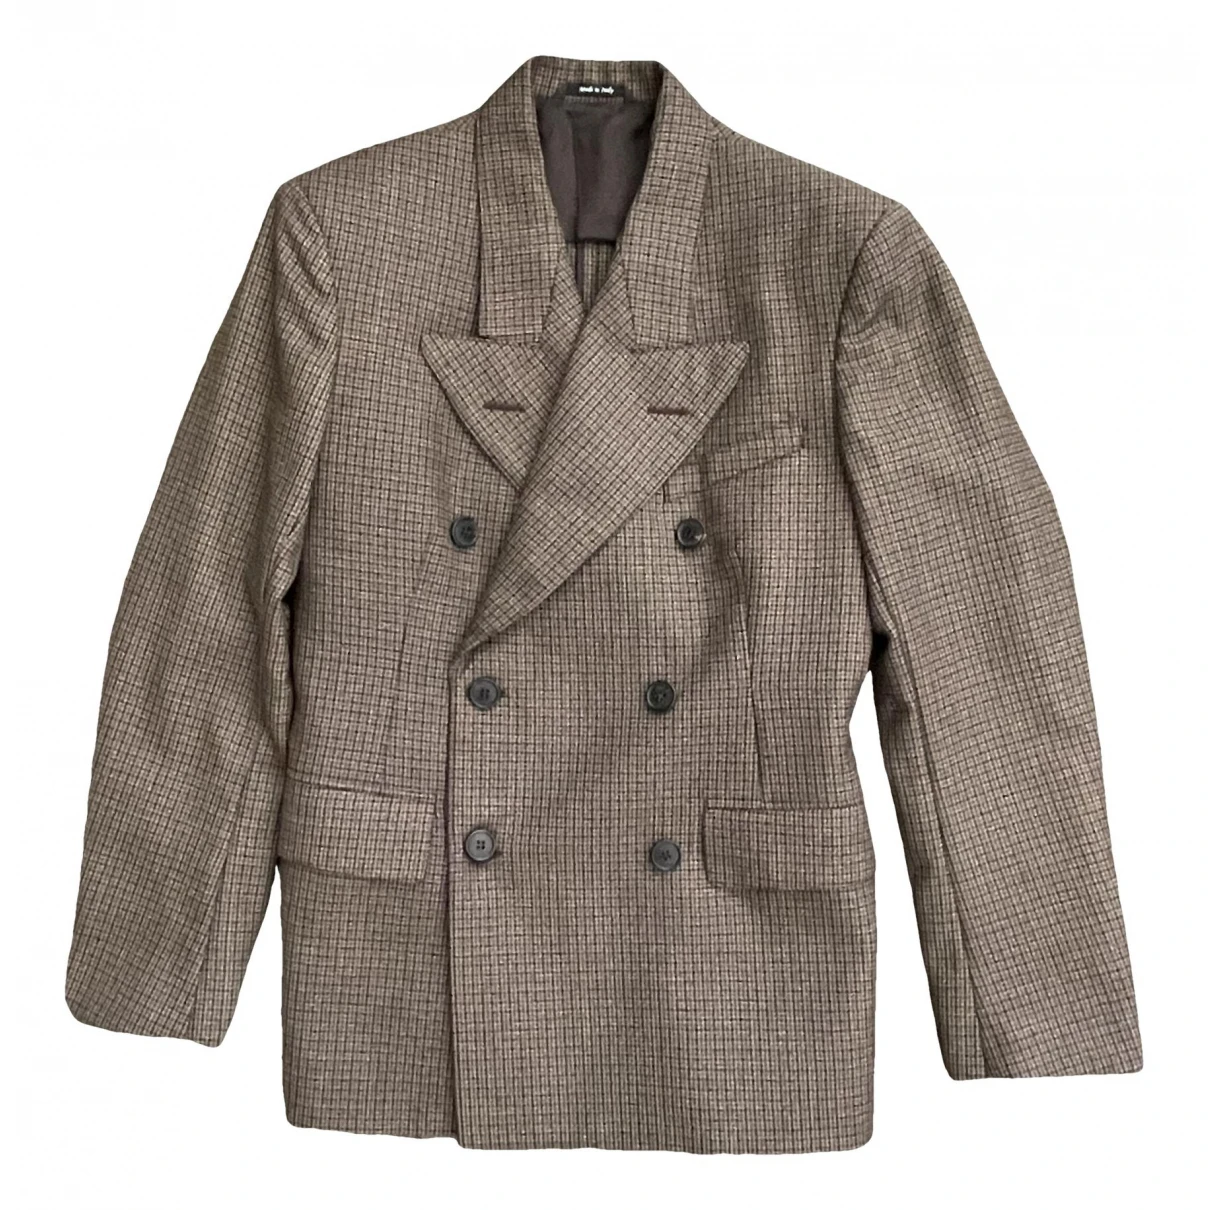 clothing Maison Martin Margiela jackets for Female Wool 38 IT. Used condition